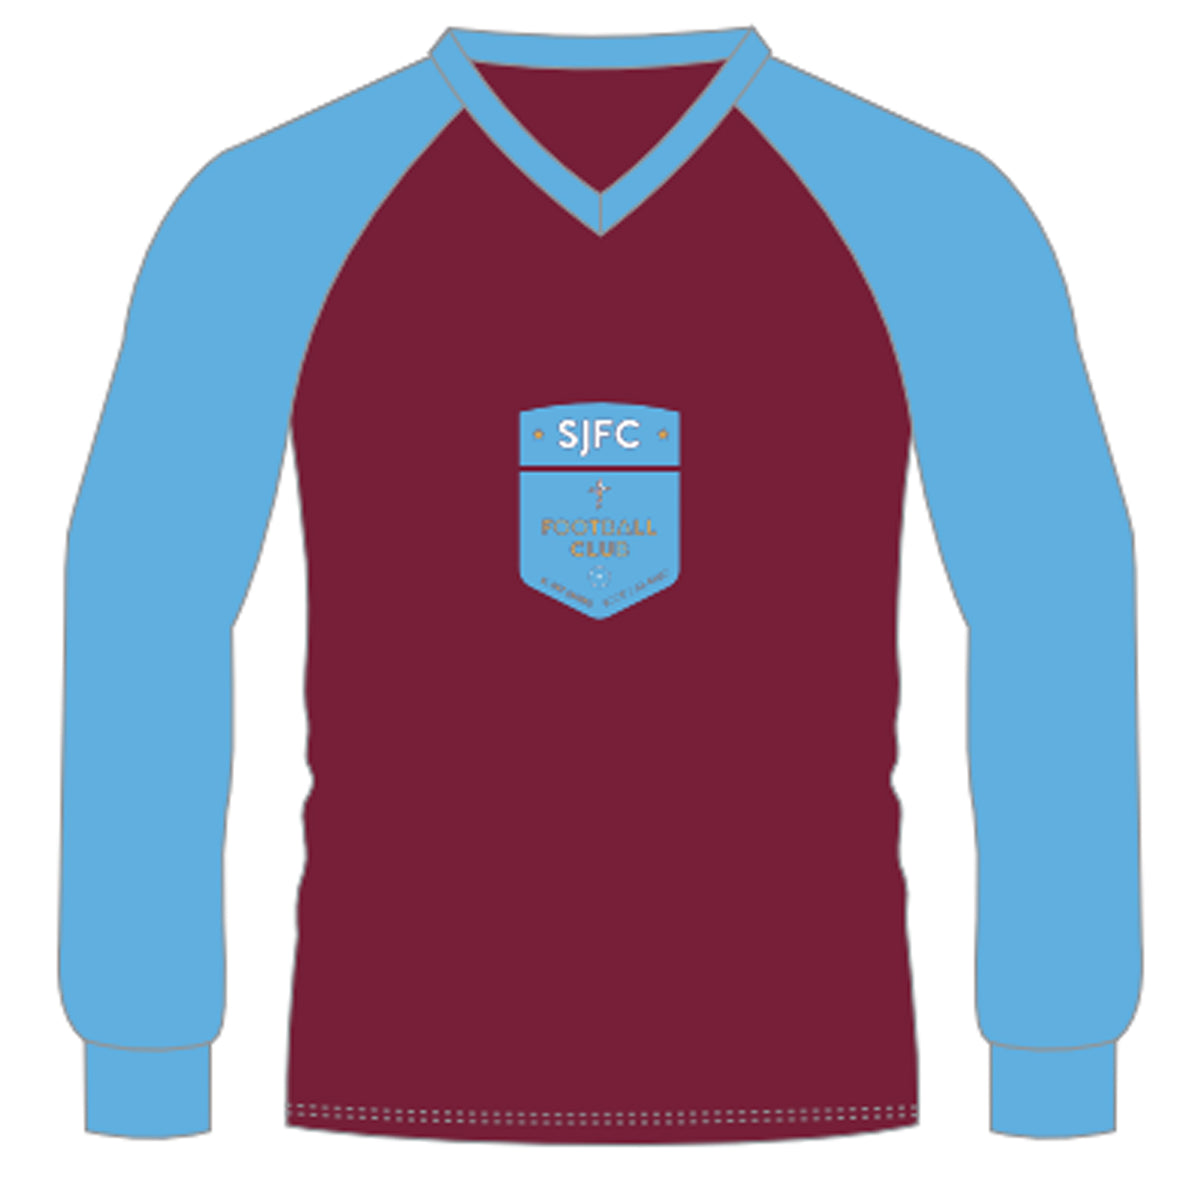 St James FC Shirt: Mar/Sky